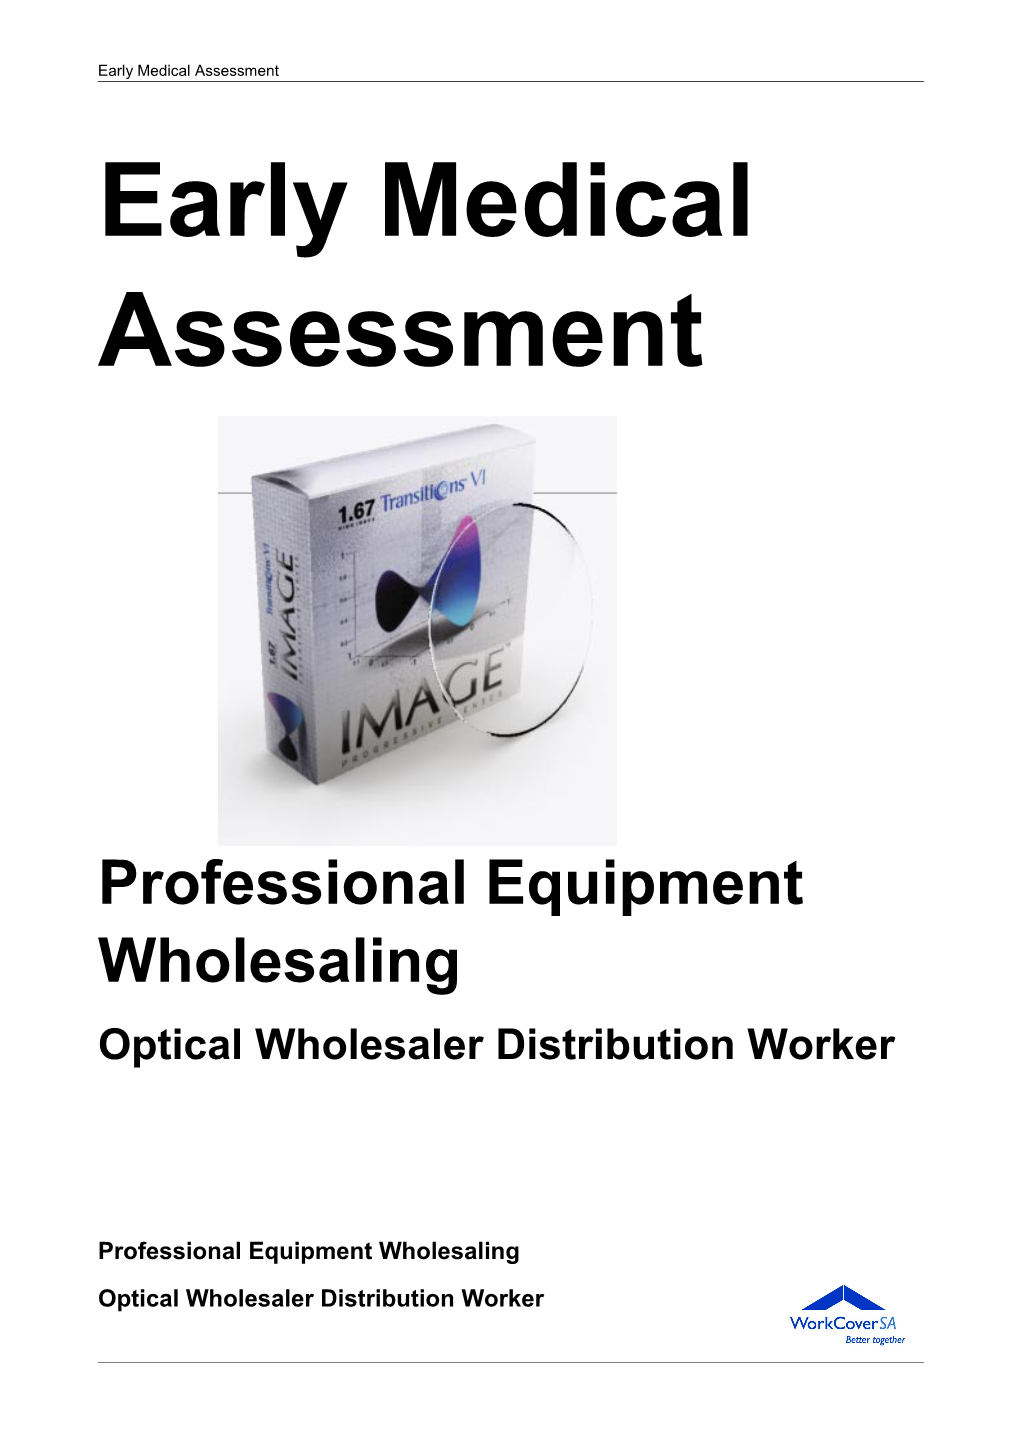 Professional Equipment Wholesale - Optical Wholesaler Distribution Worker